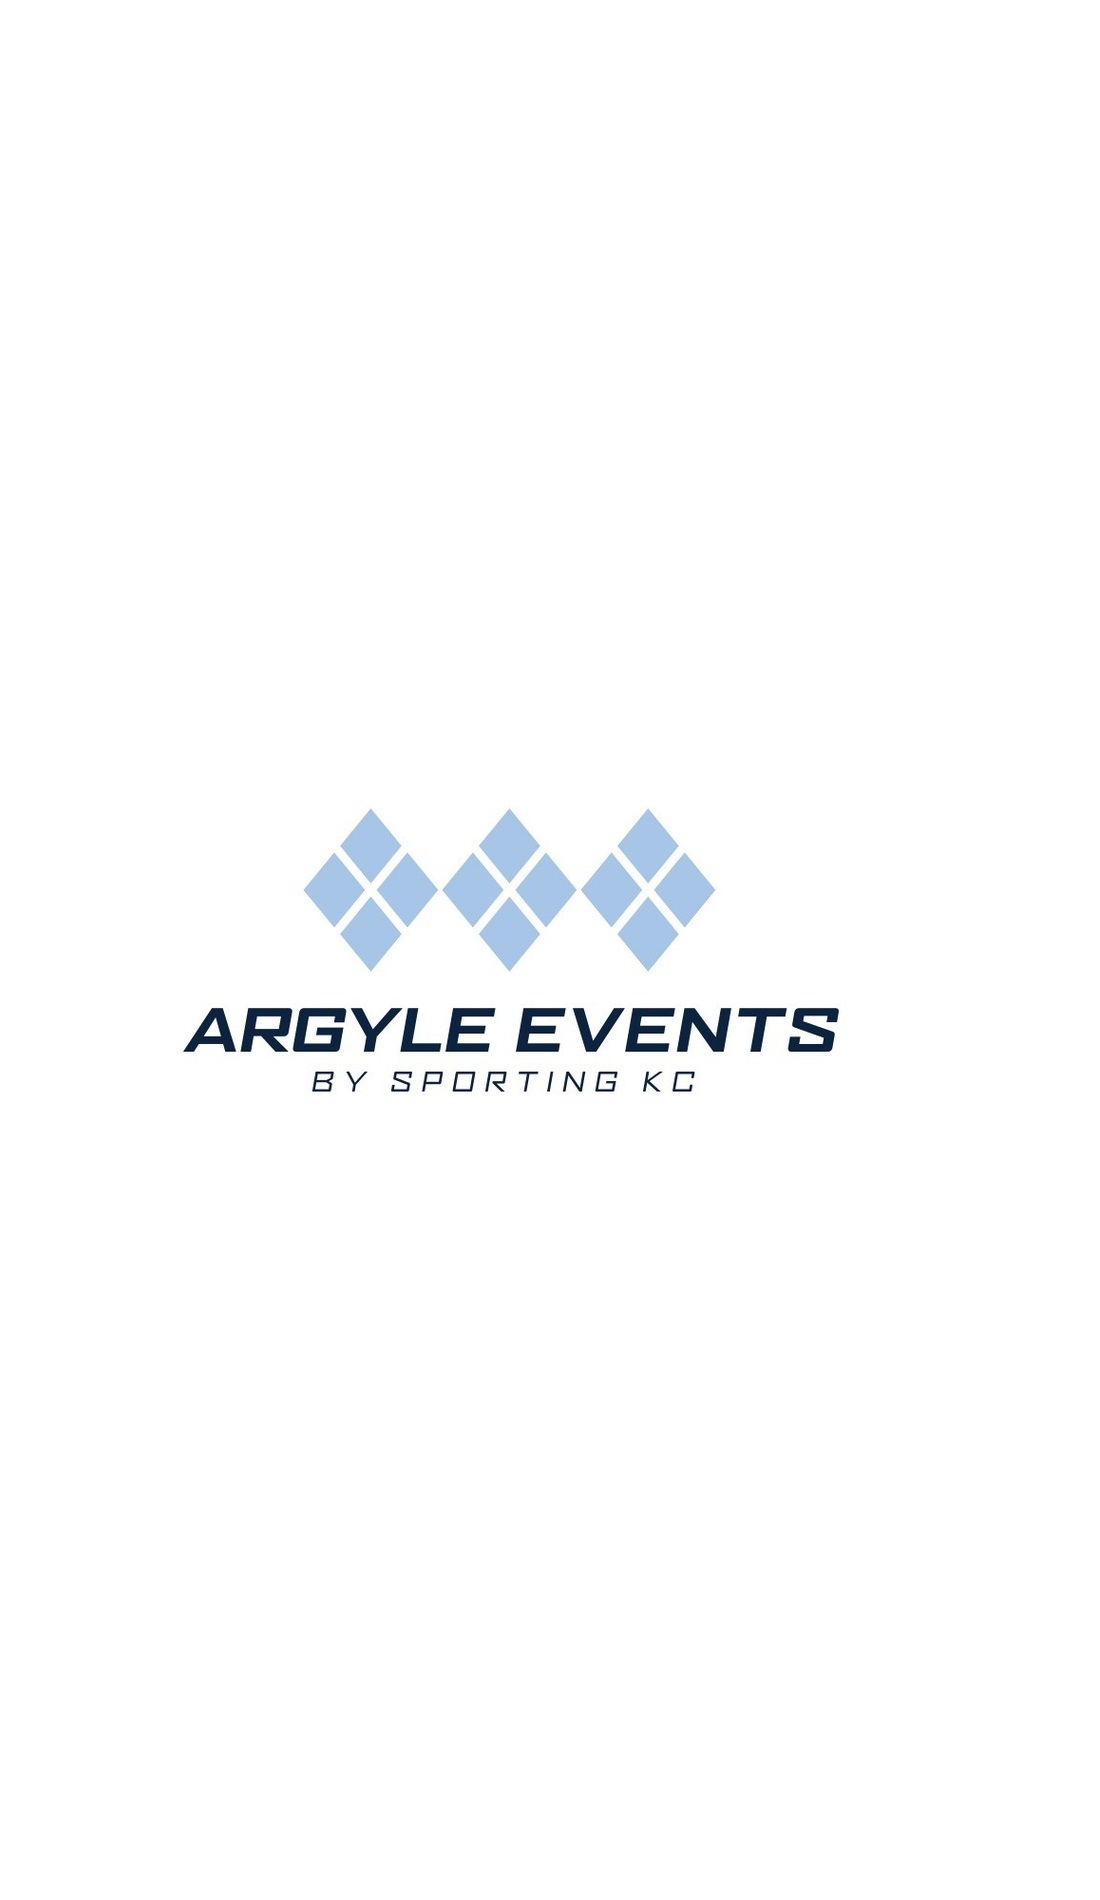 A Argyle Events live event